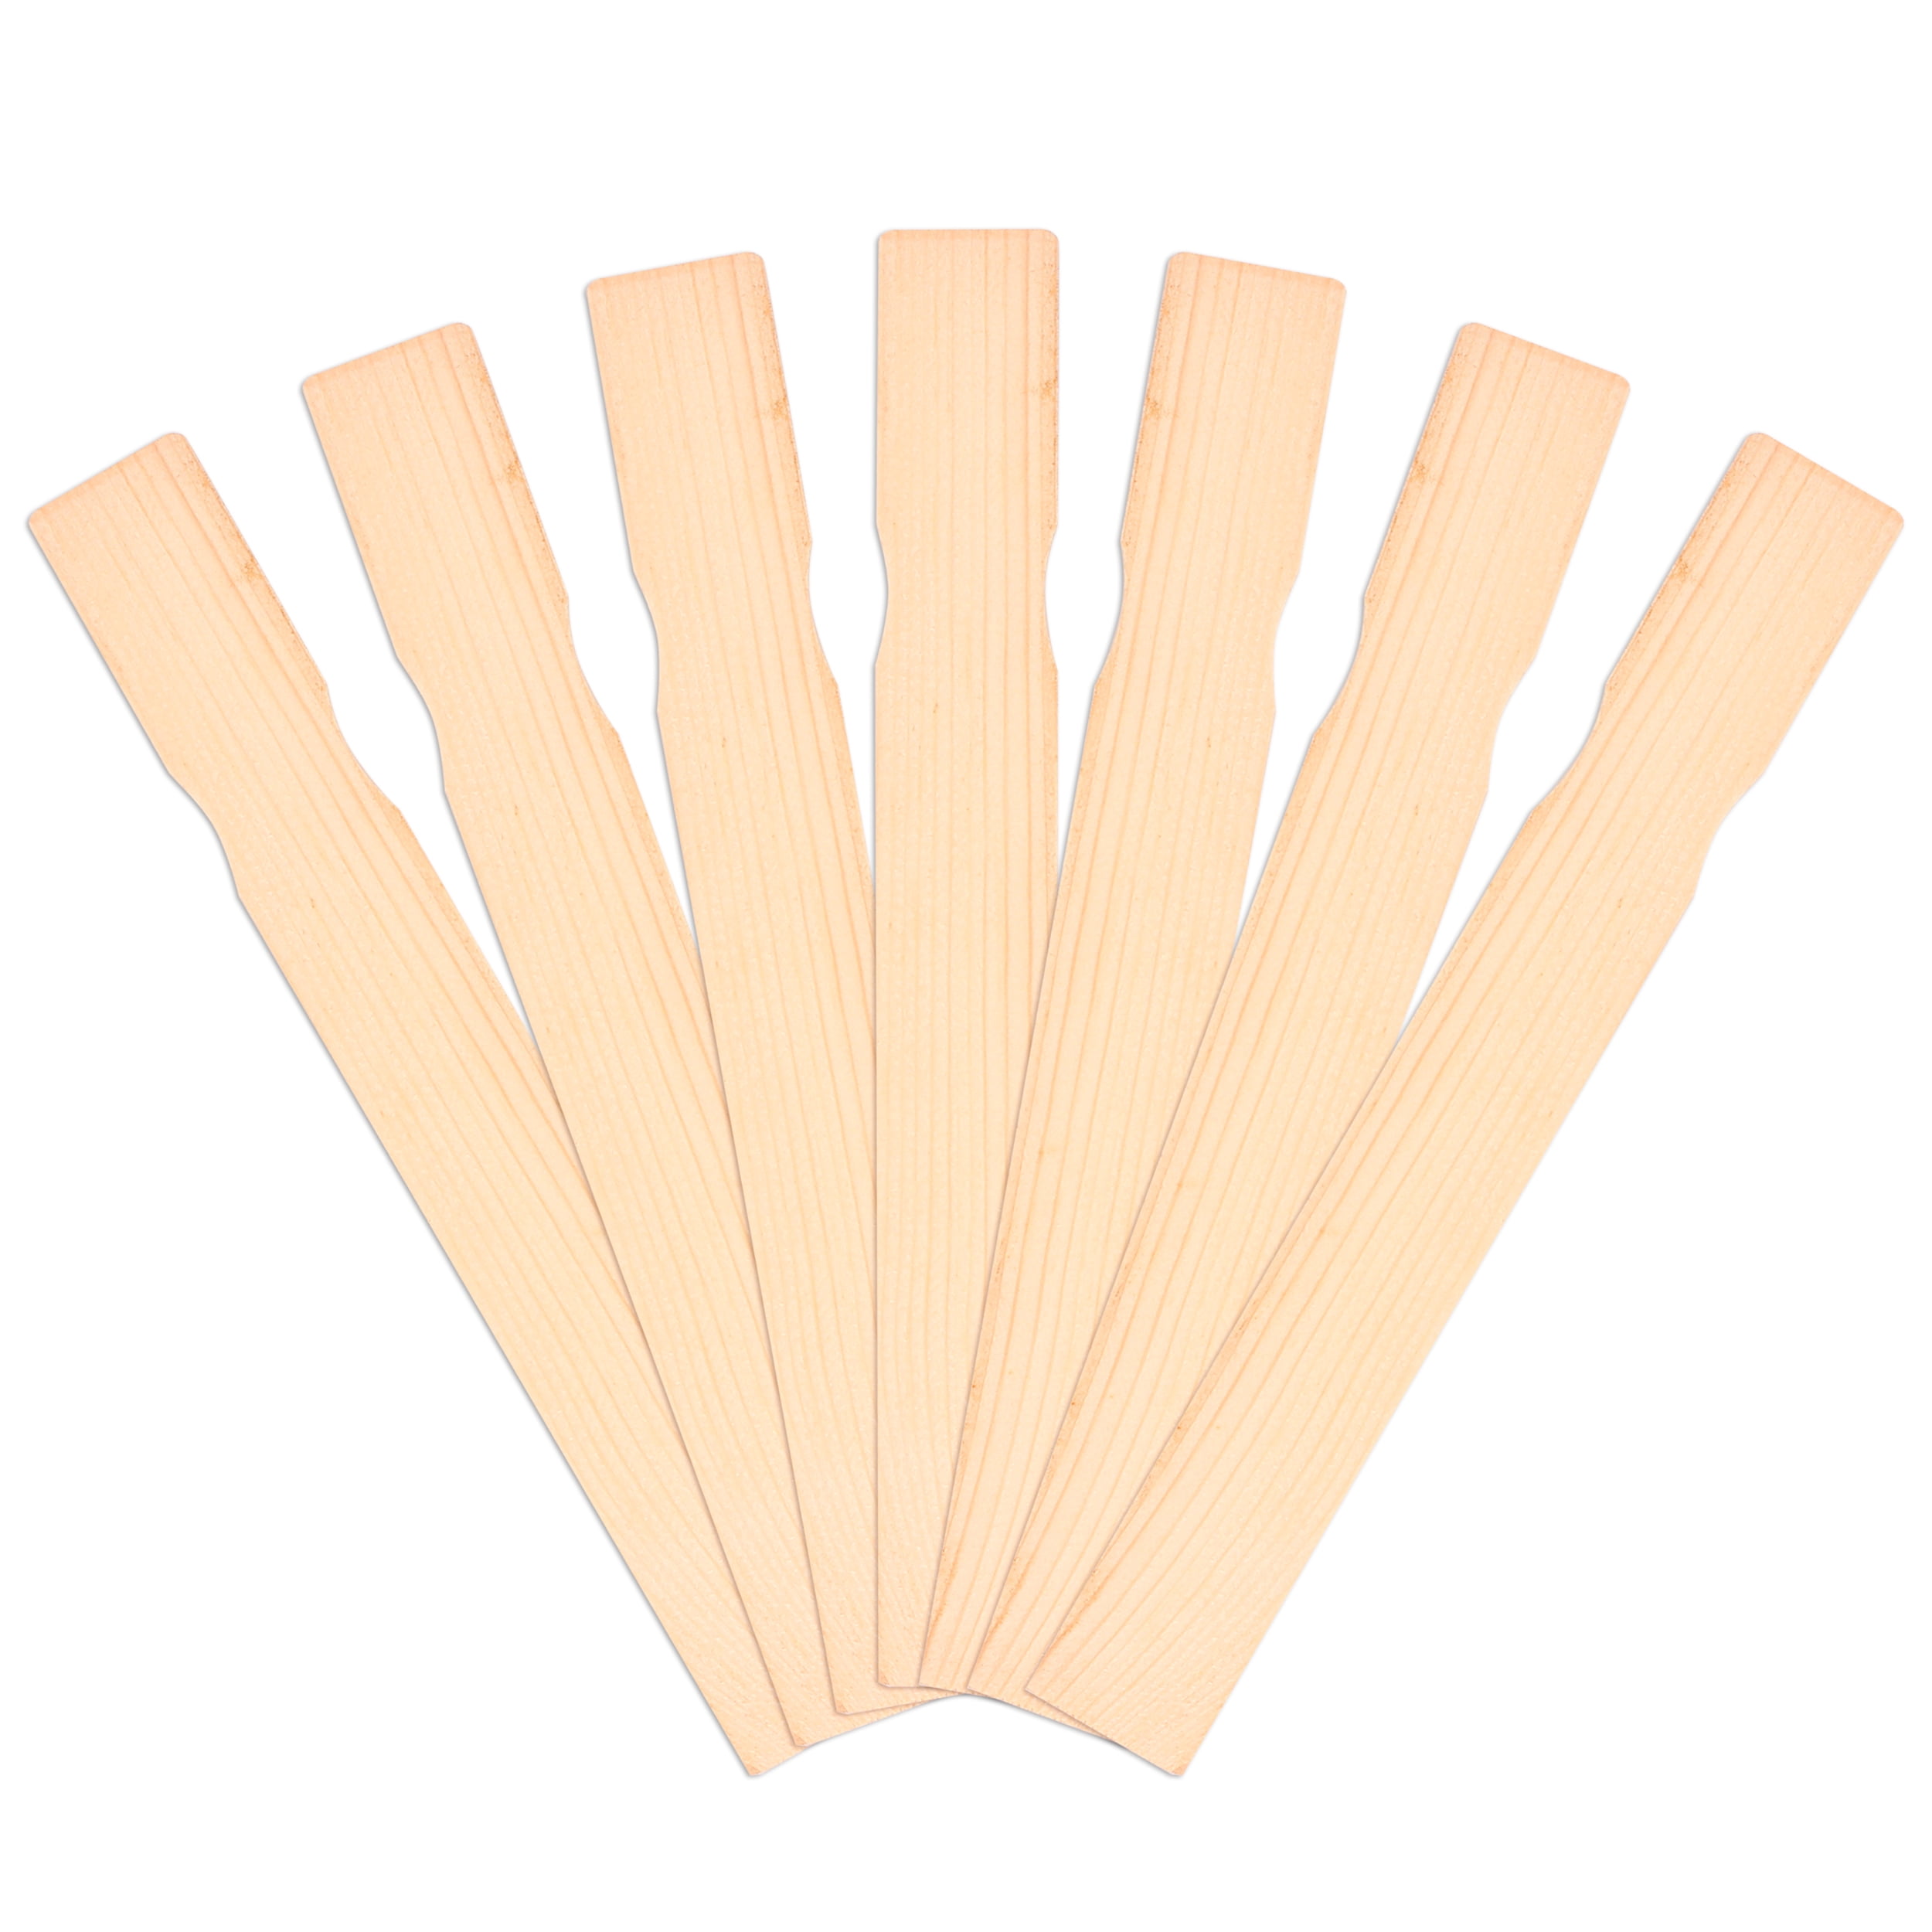 Amkoskr Paint Sticks,Wooden Paint Stir Sticks 10 inch,Paint Mix Sticks,Pack  of 100,Natural